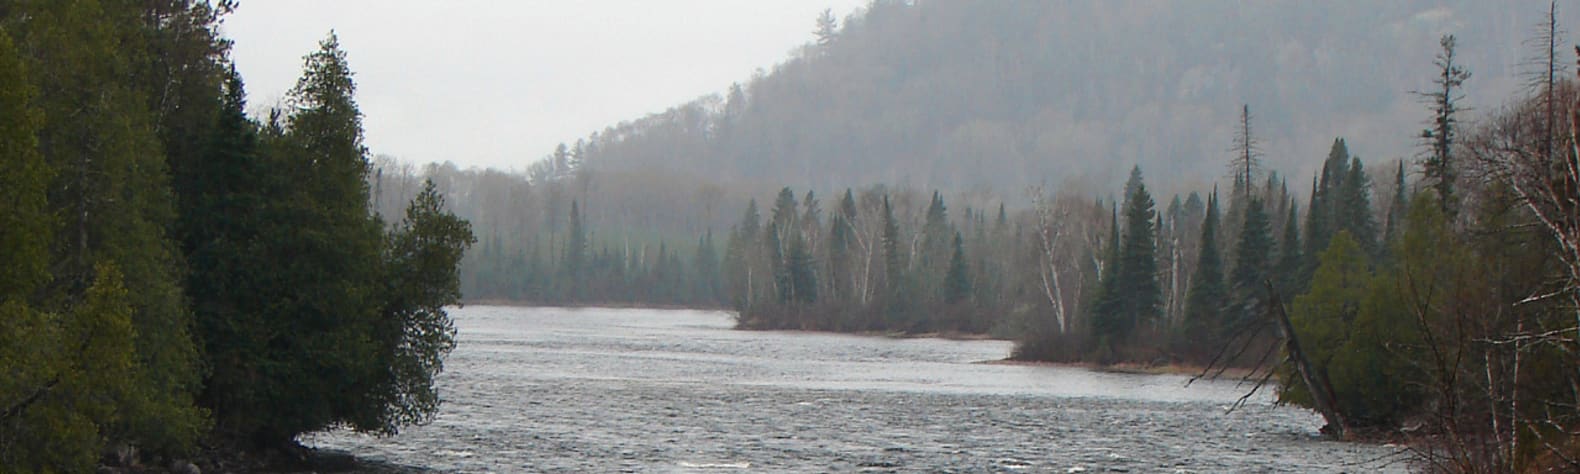 Mississagi River Provincial Park